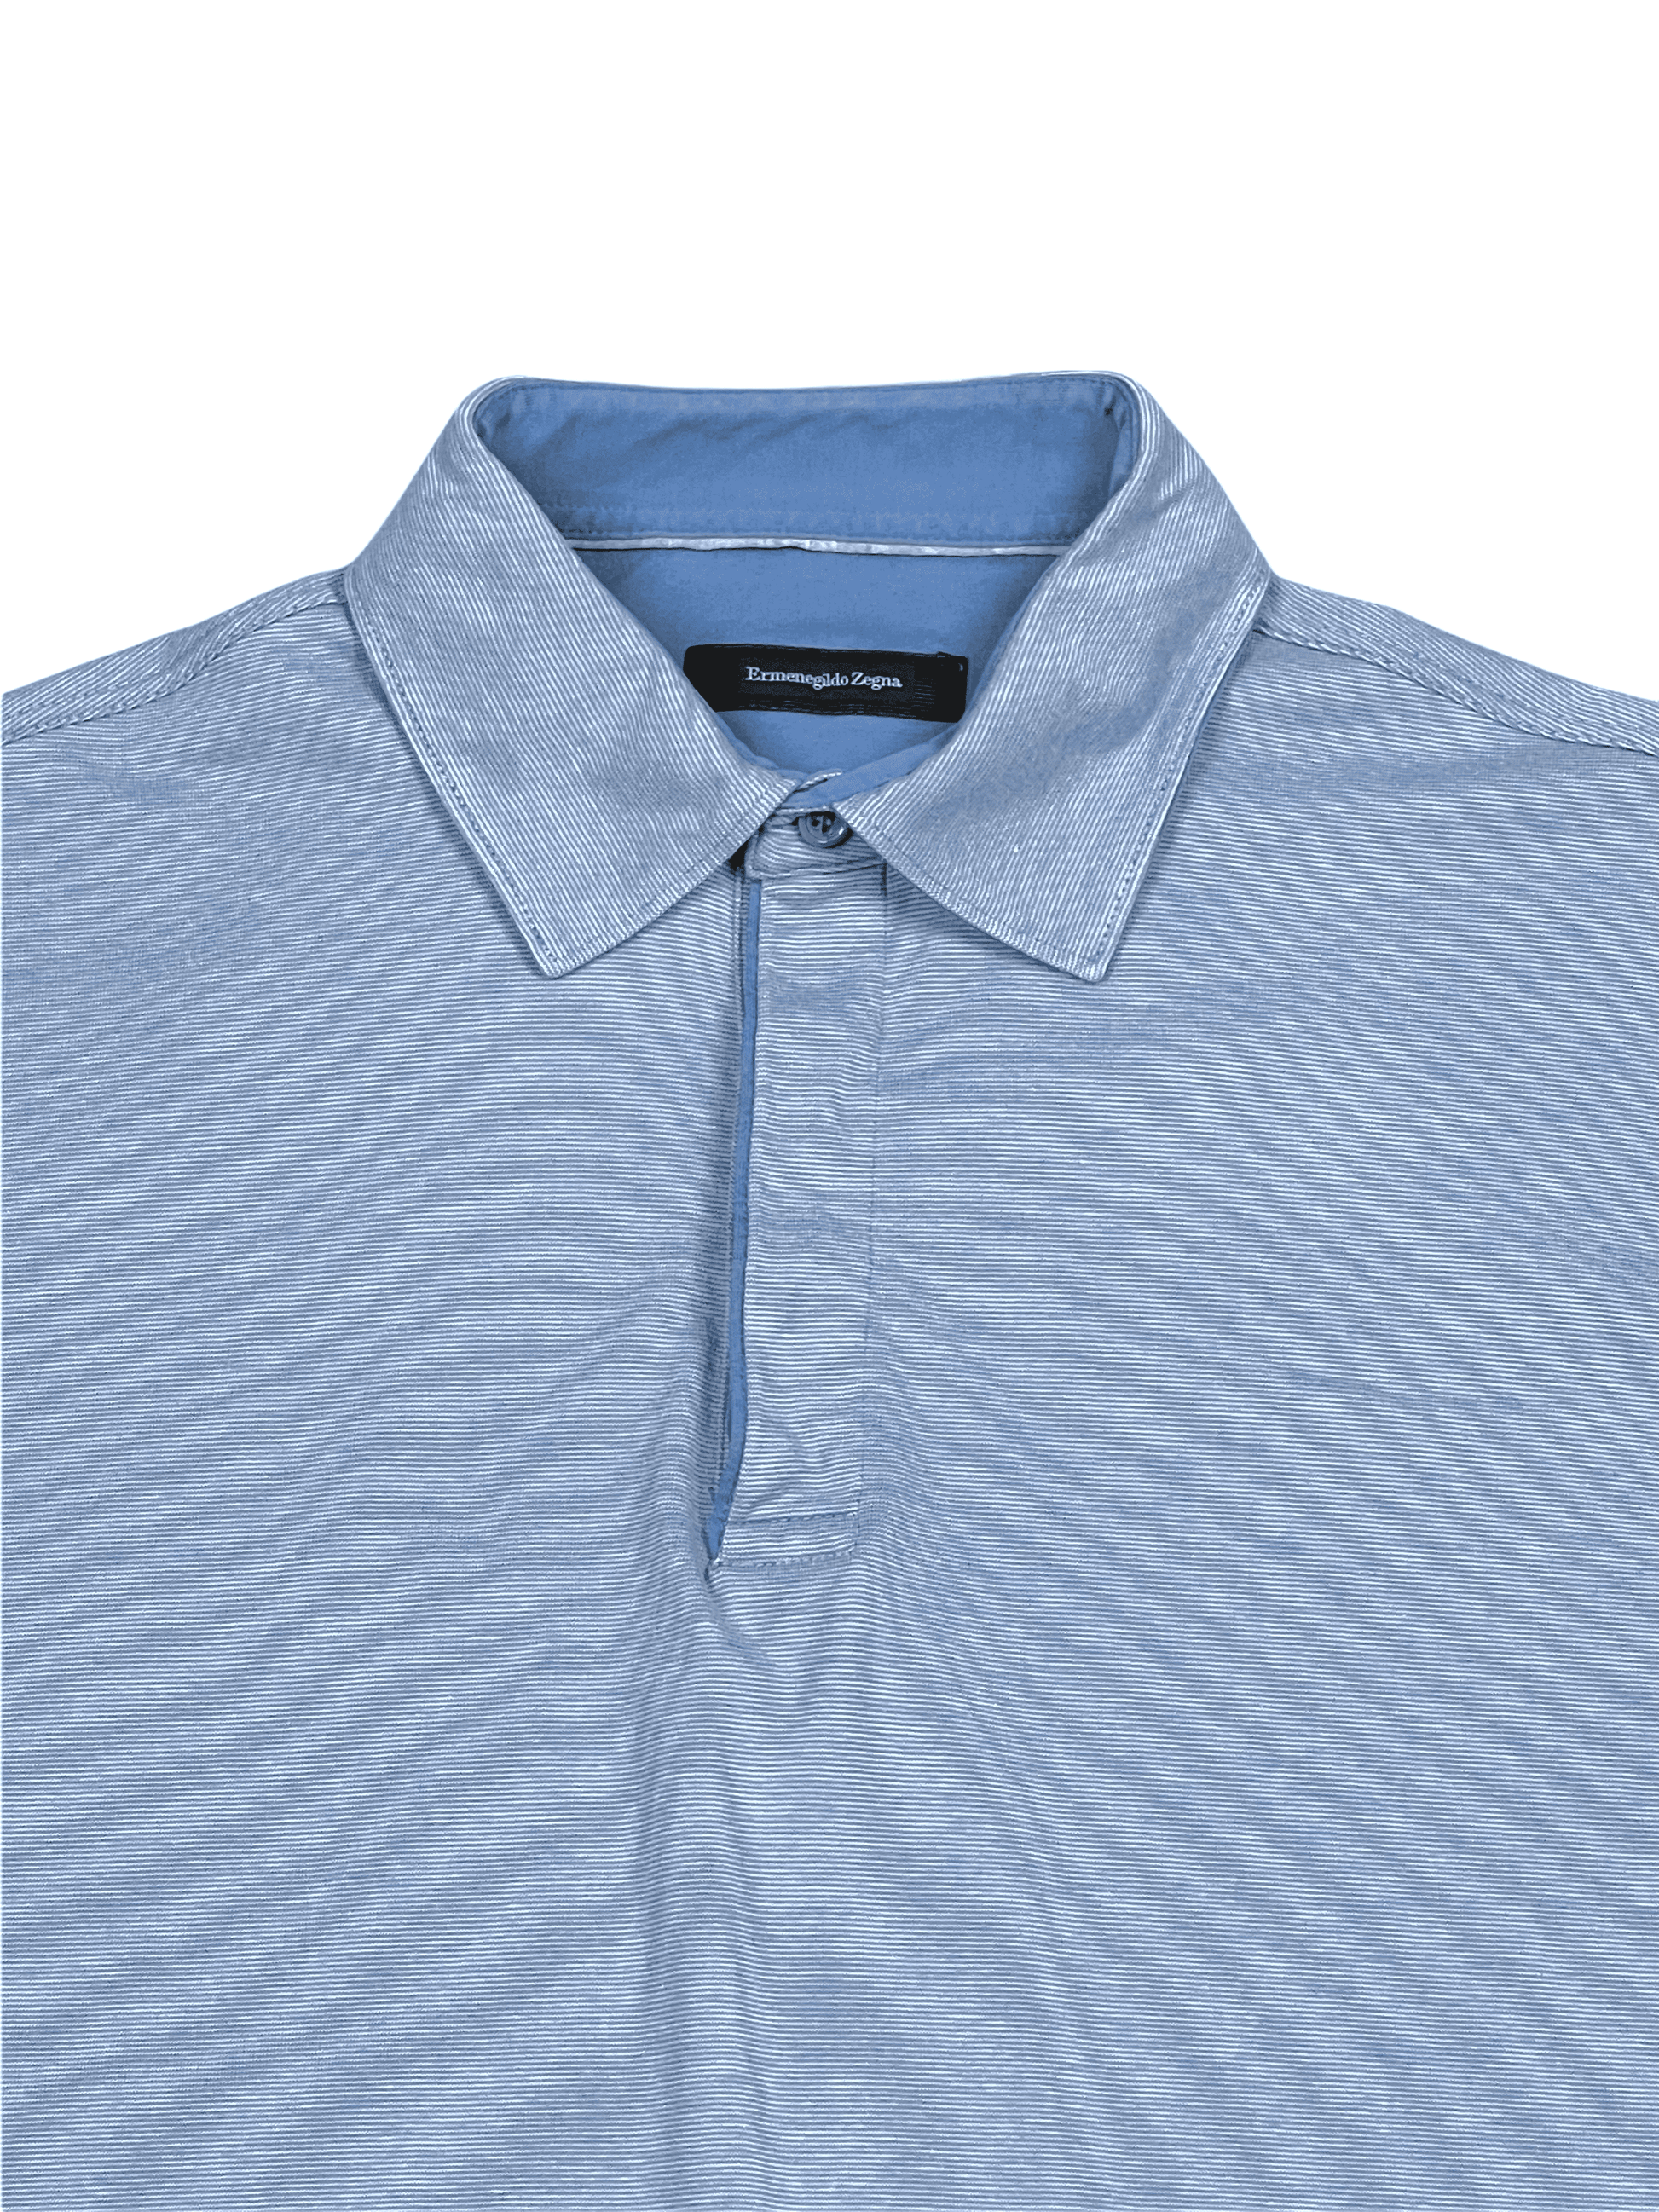 Ermenegildo Zegna Blue Cotton Polo Large - Genuine Design Luxury Consignment for Men. New & Pre-Owned Clothing, Shoes, & Accessories. Calgary, Canada